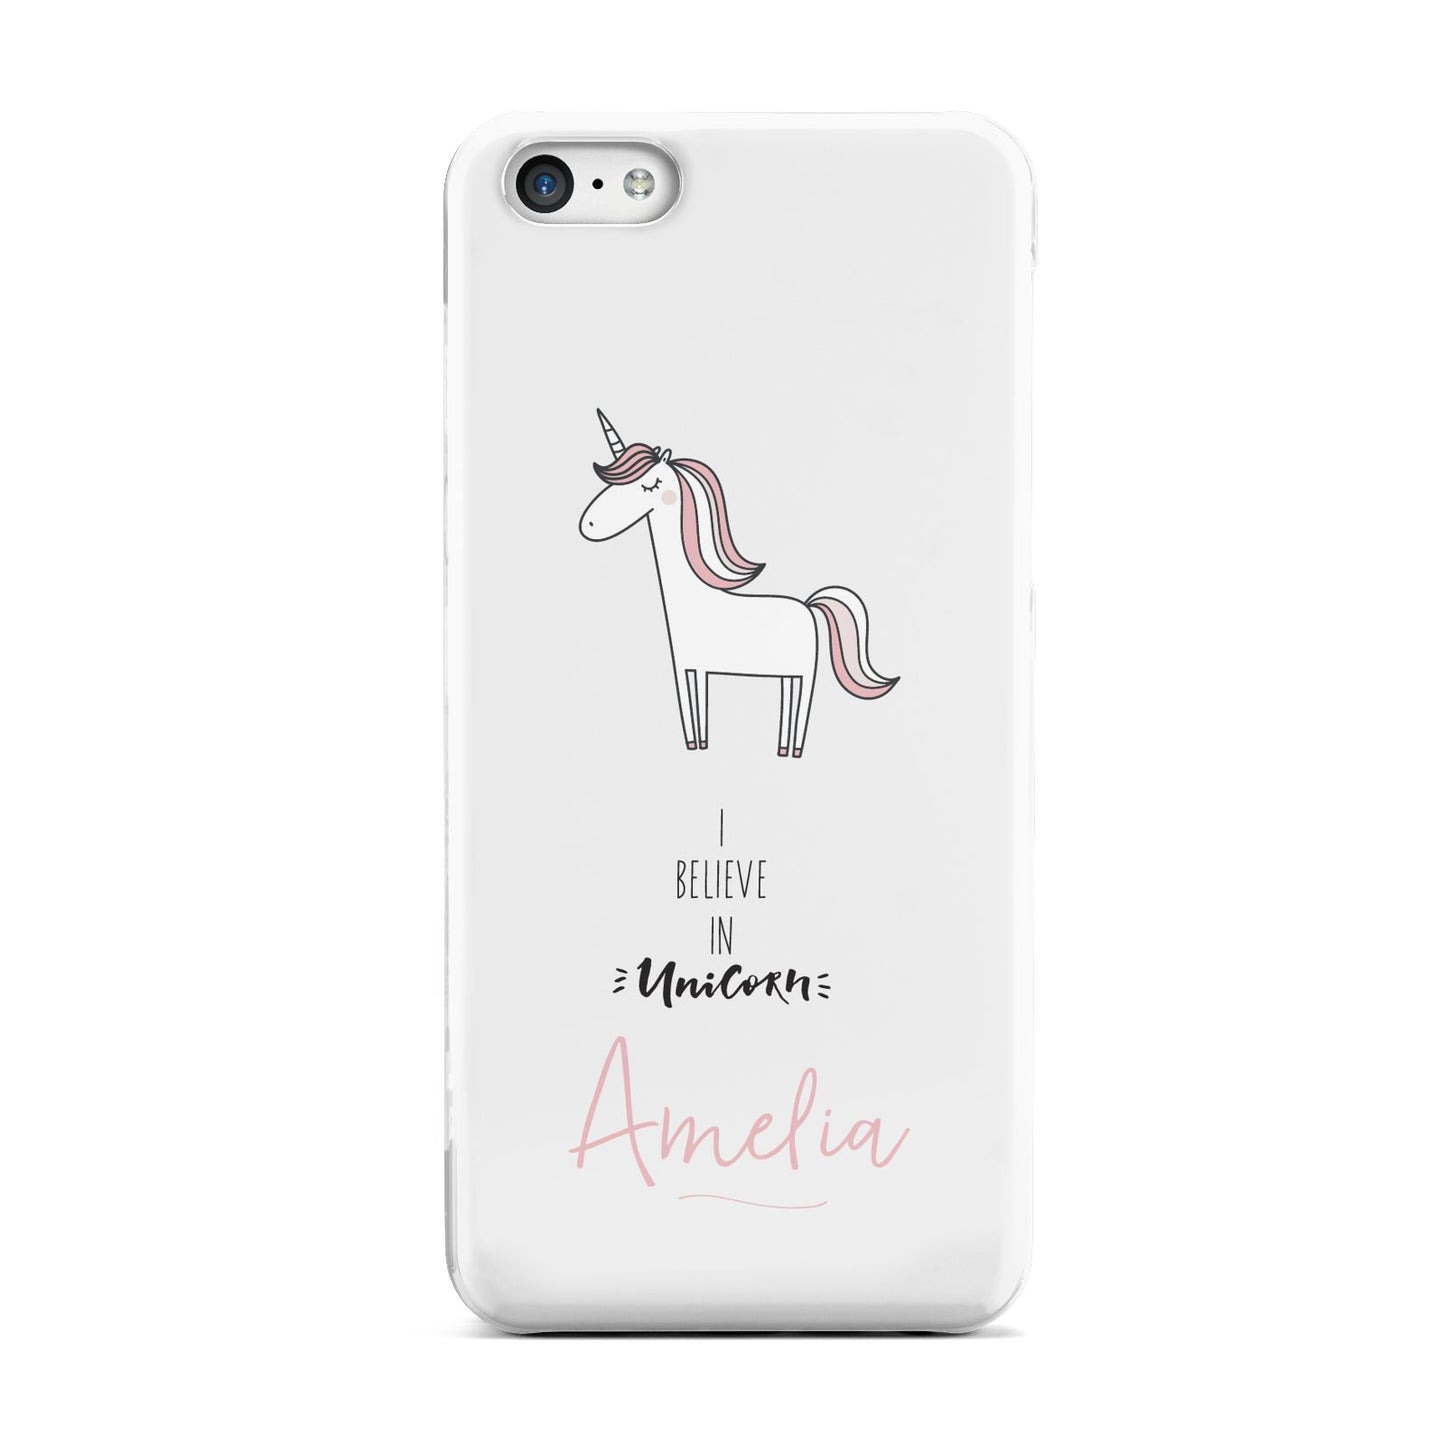 I Believe in Unicorn Apple iPhone 5c Case